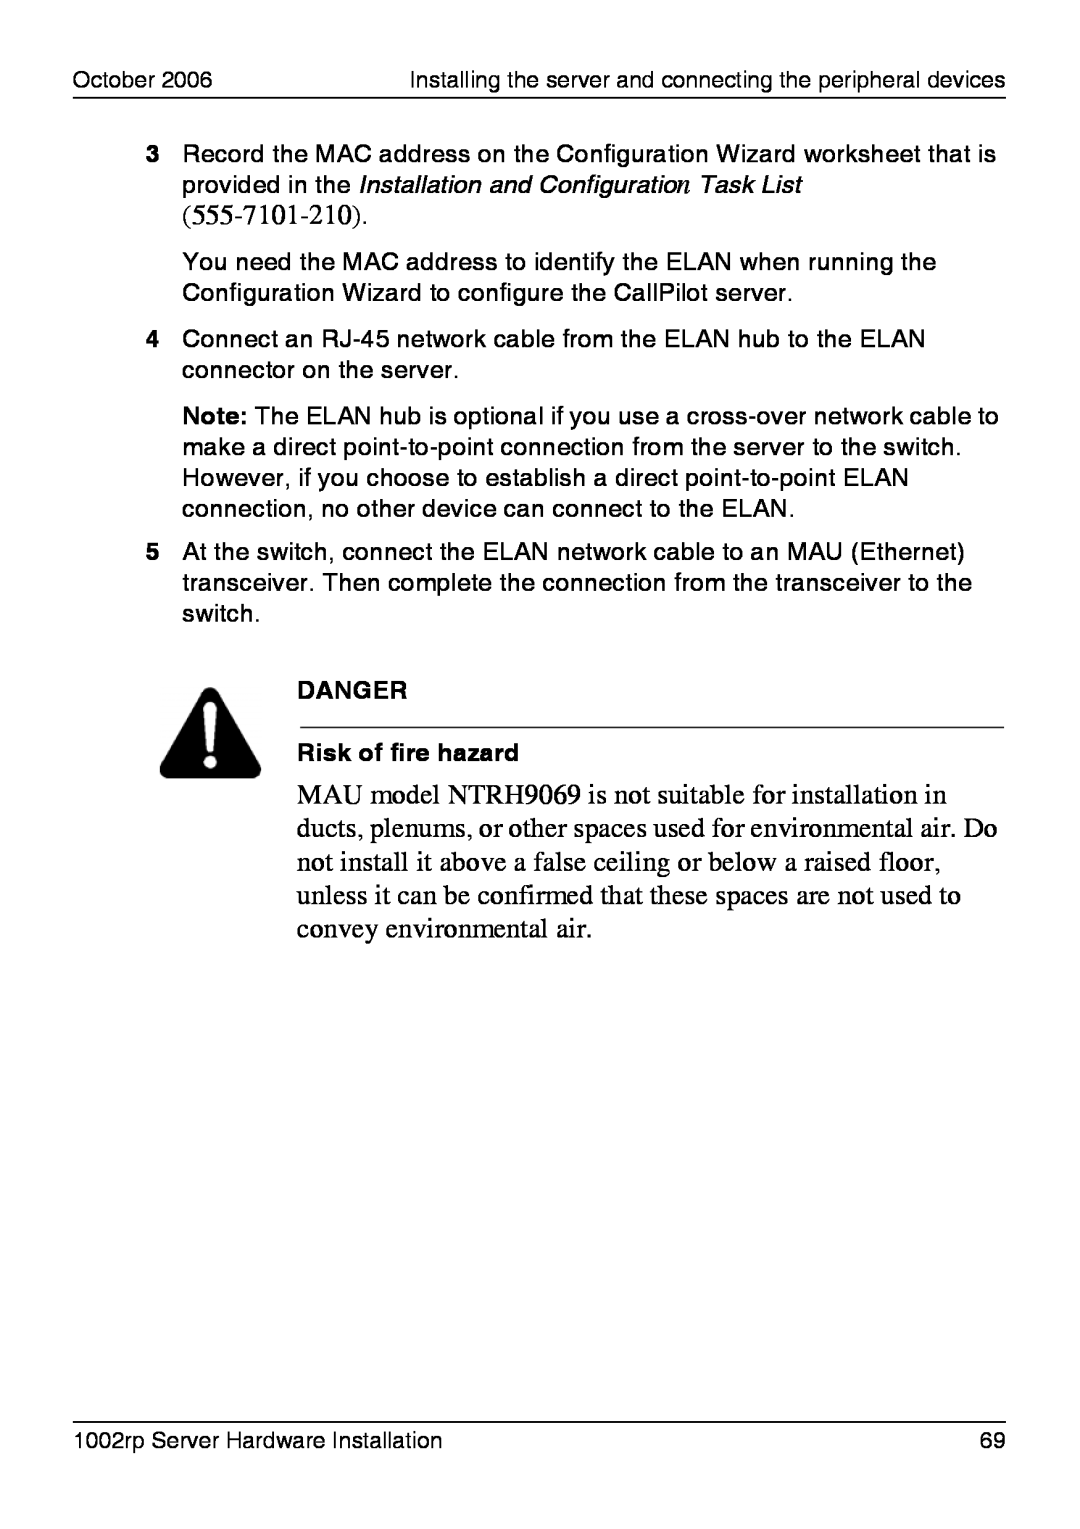 Nortel Networks 1002rp manual 555-7101-210, DANGER Risk of fire hazard 